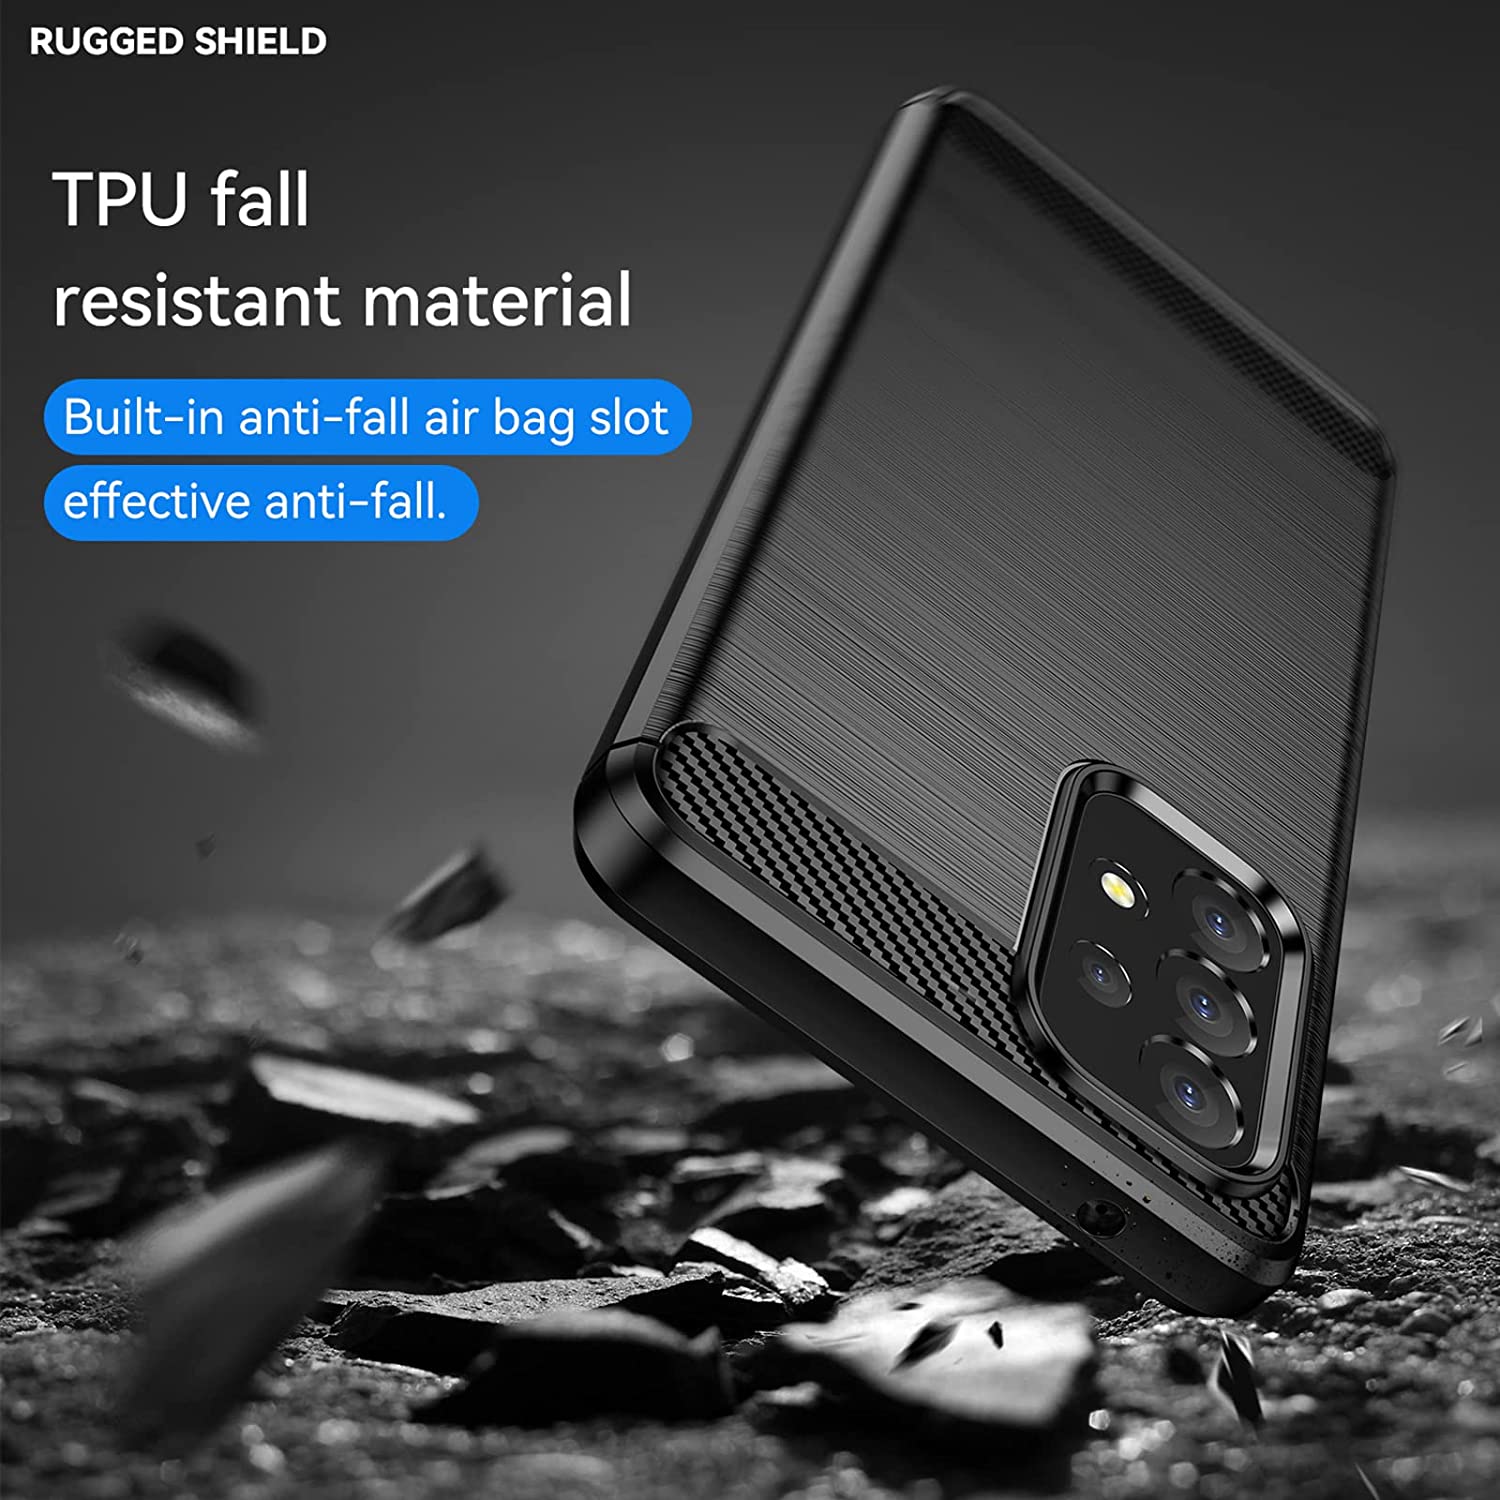 Samsung Galaxy A53 5G Slim Soft Flexible Carbon Fiber Brush Metal Style TPU Case